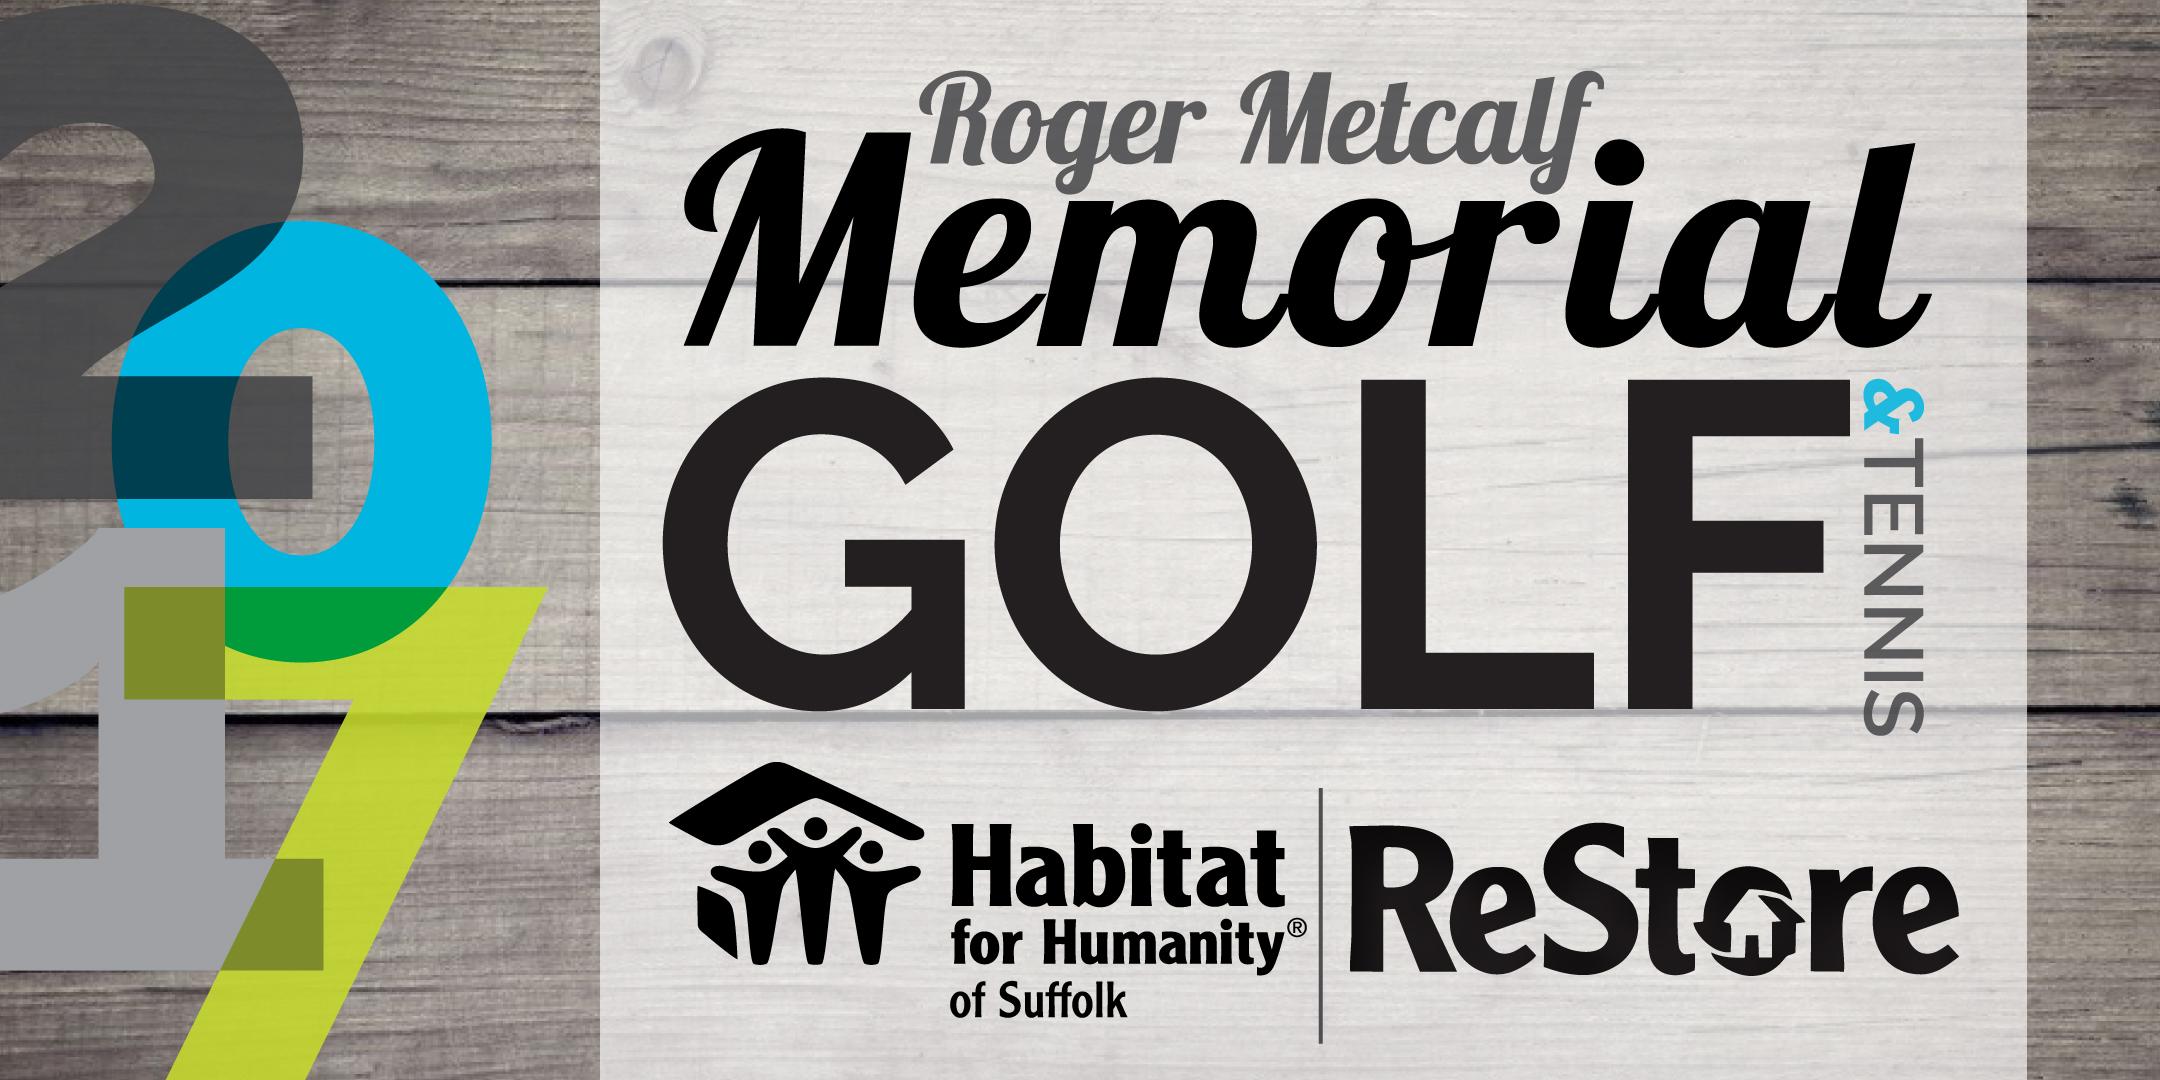 Habitat Suffolk's 19th Annual Roger Metcalf Memorial Golf and Tennis Classic